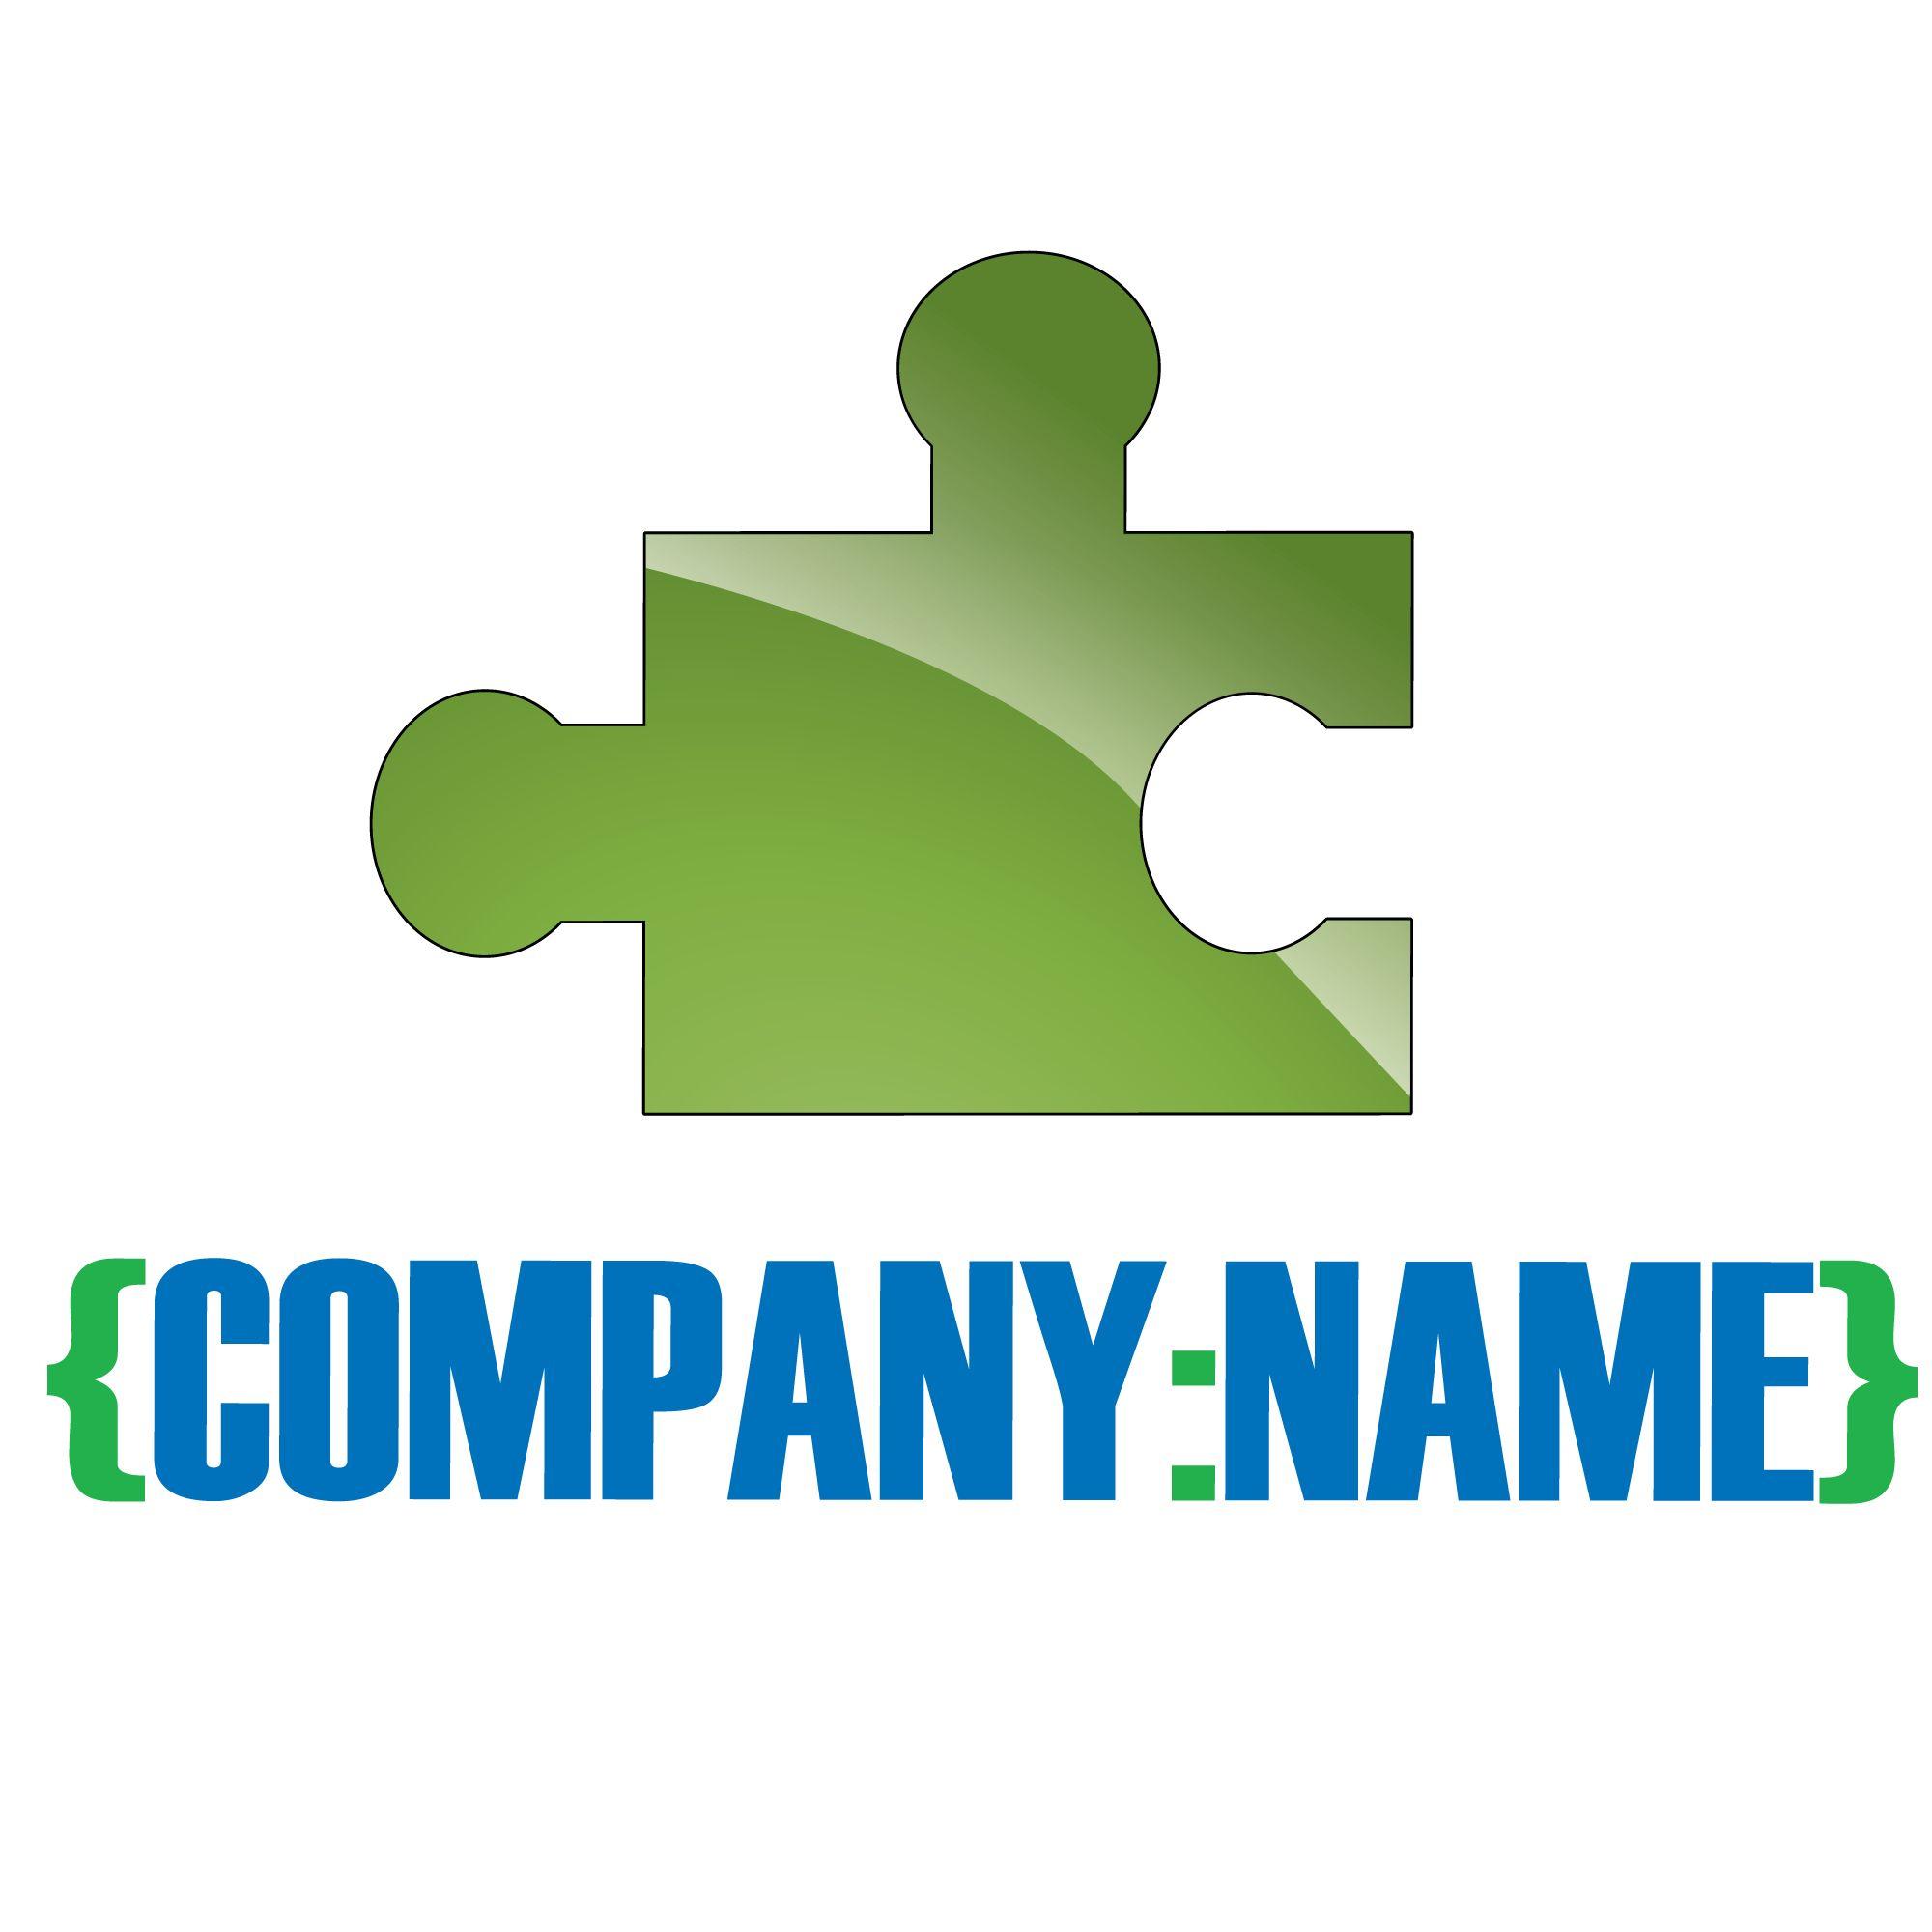 CompanyName VL Logo - Provide 50 editable logos for your company or band